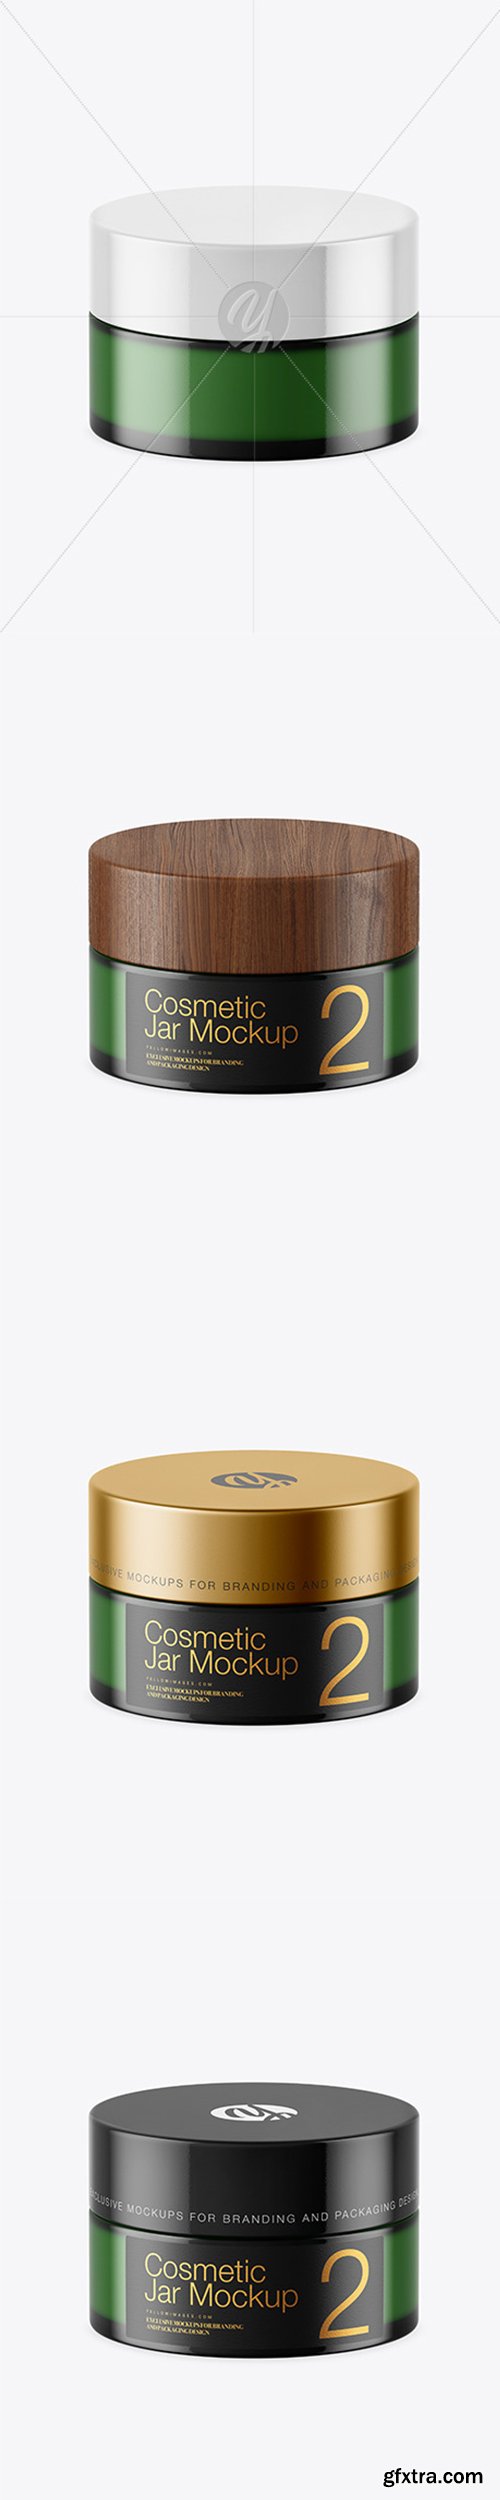 Green Glass Cosmetic Jar Mockup 45173